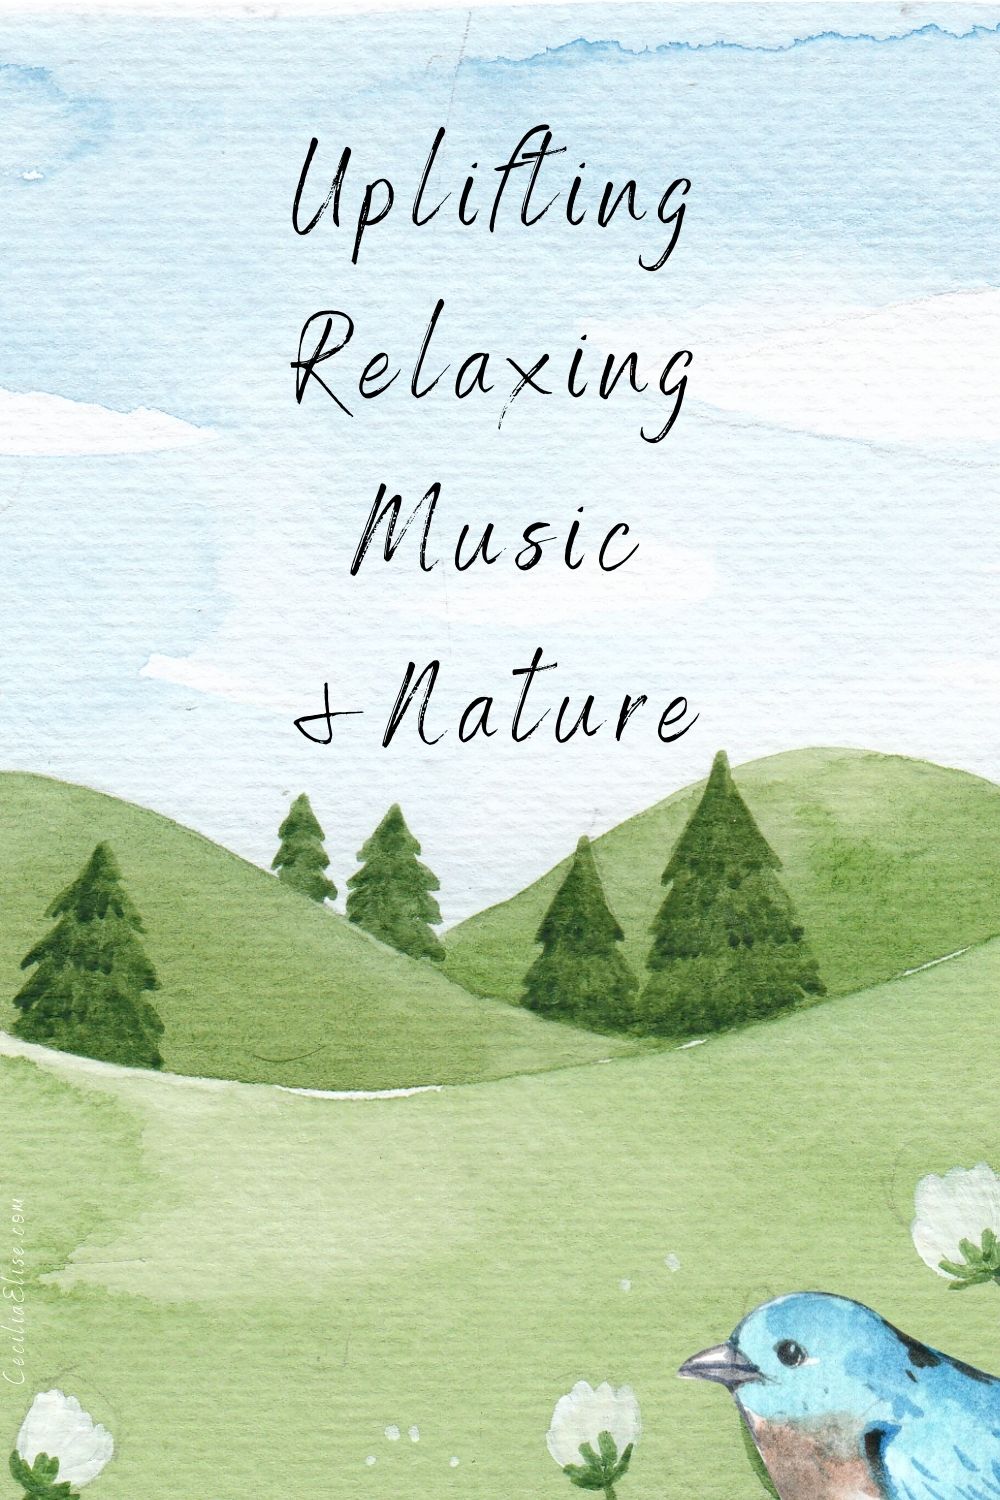 
Uplifting Relaxing
Music
&Nature